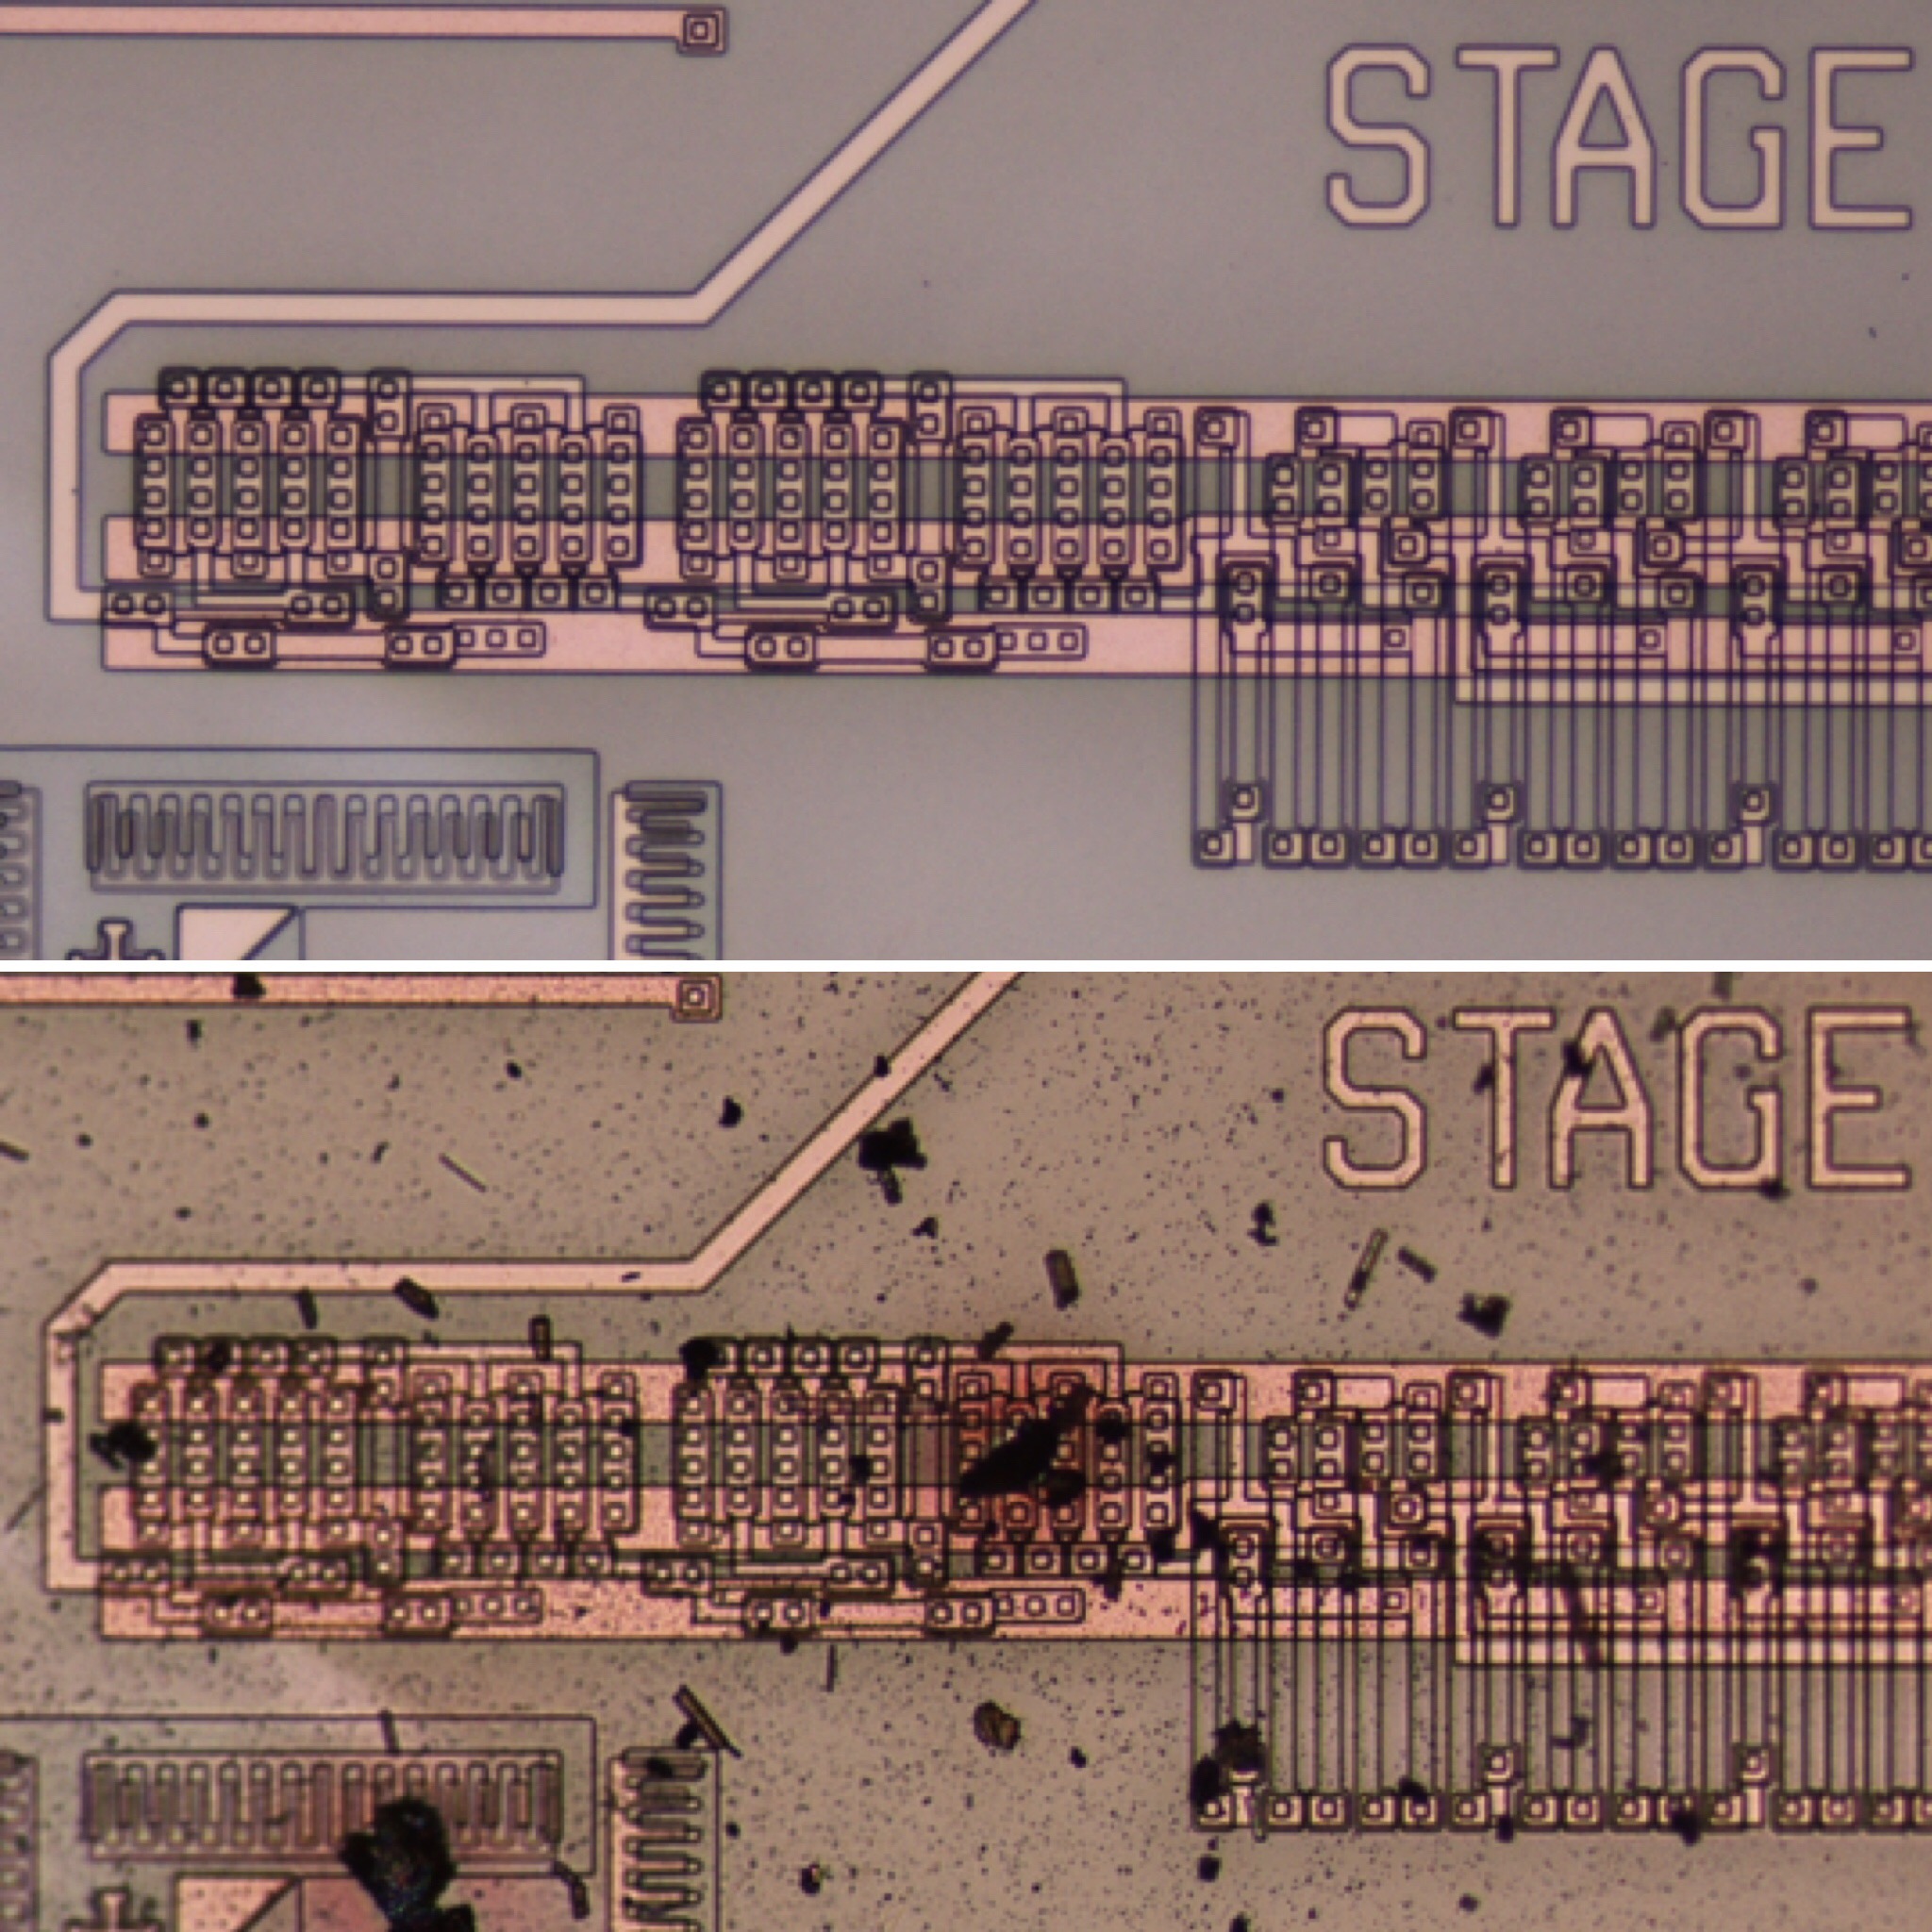 NASA Has Finally Built A Computer Chip To Survive On Venus